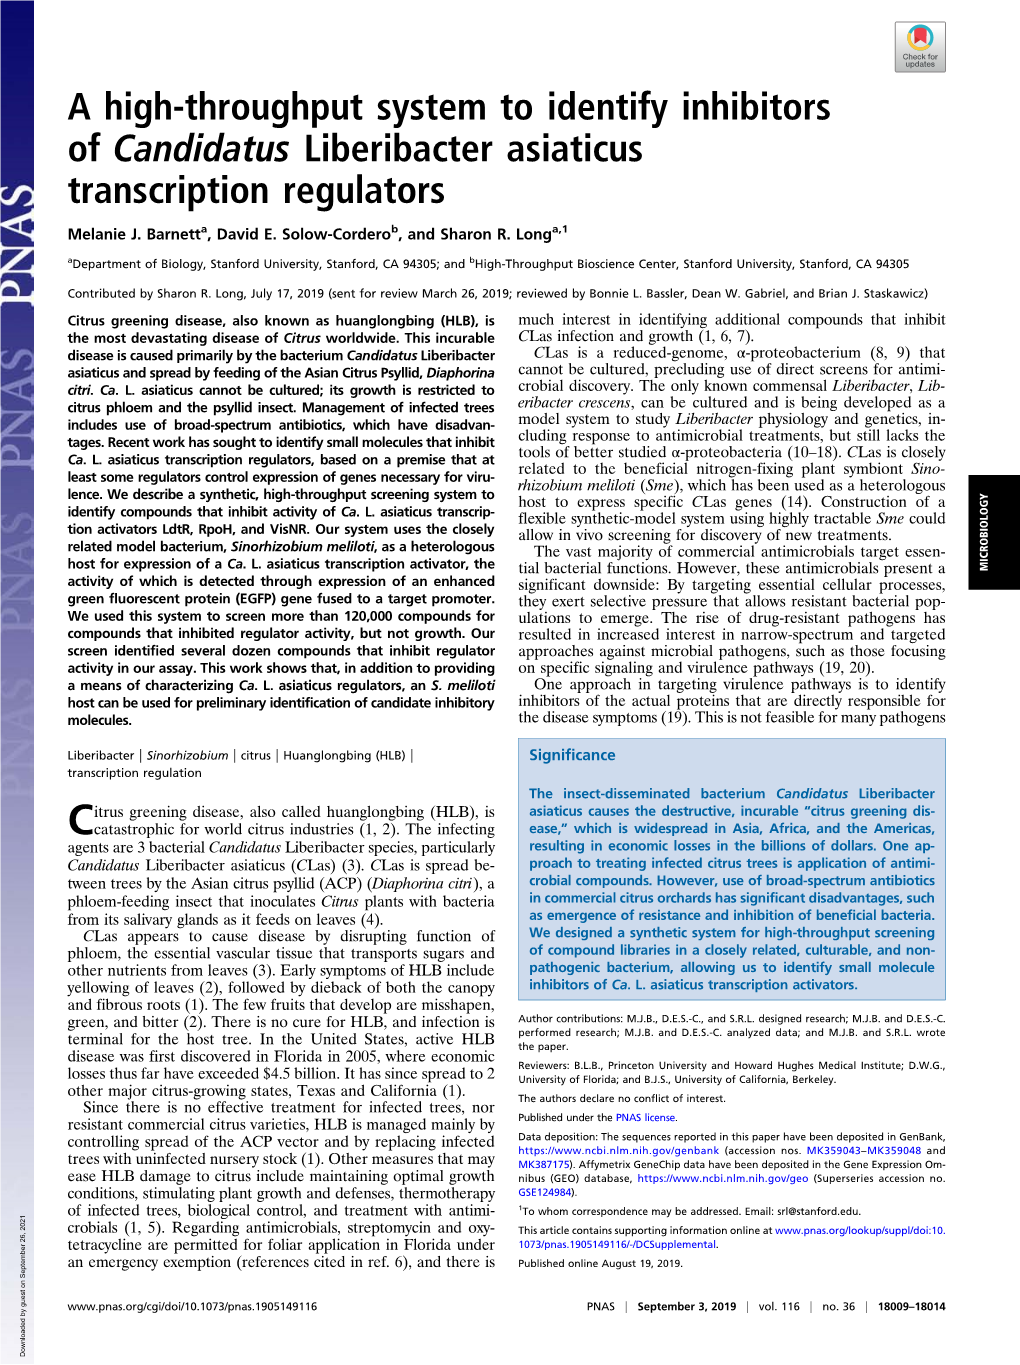 A High-Throughput System to Identify Inhibitors of Candidatus Liberibacter Asiaticus Transcription Regulators